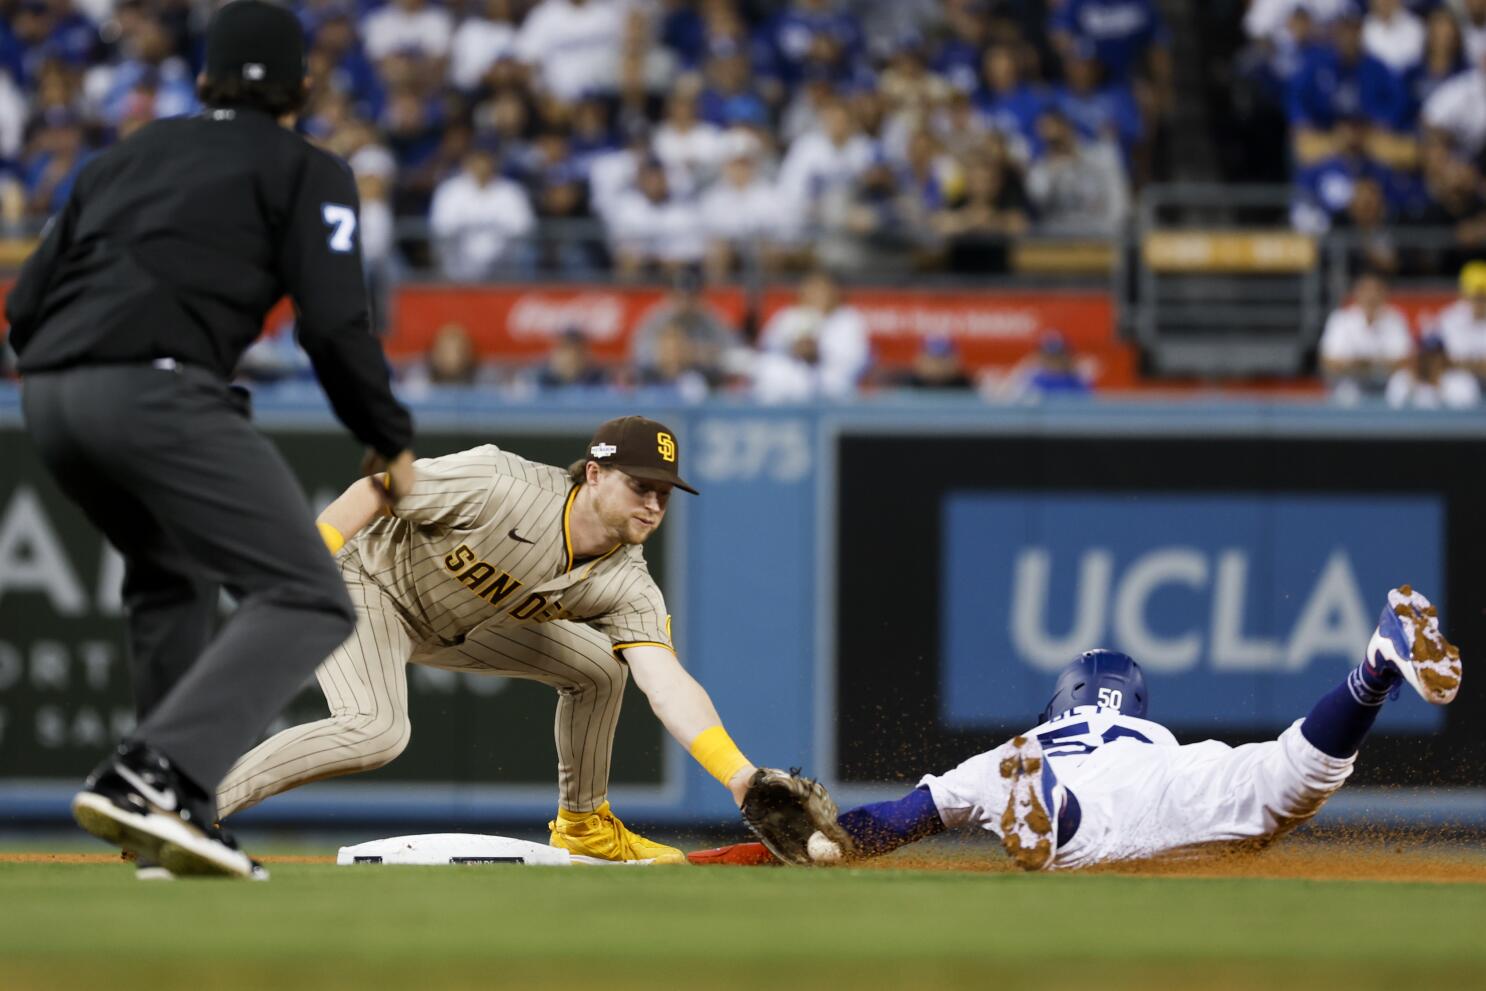 Manny Machado had fun in his Dodgers debut, reaching base four